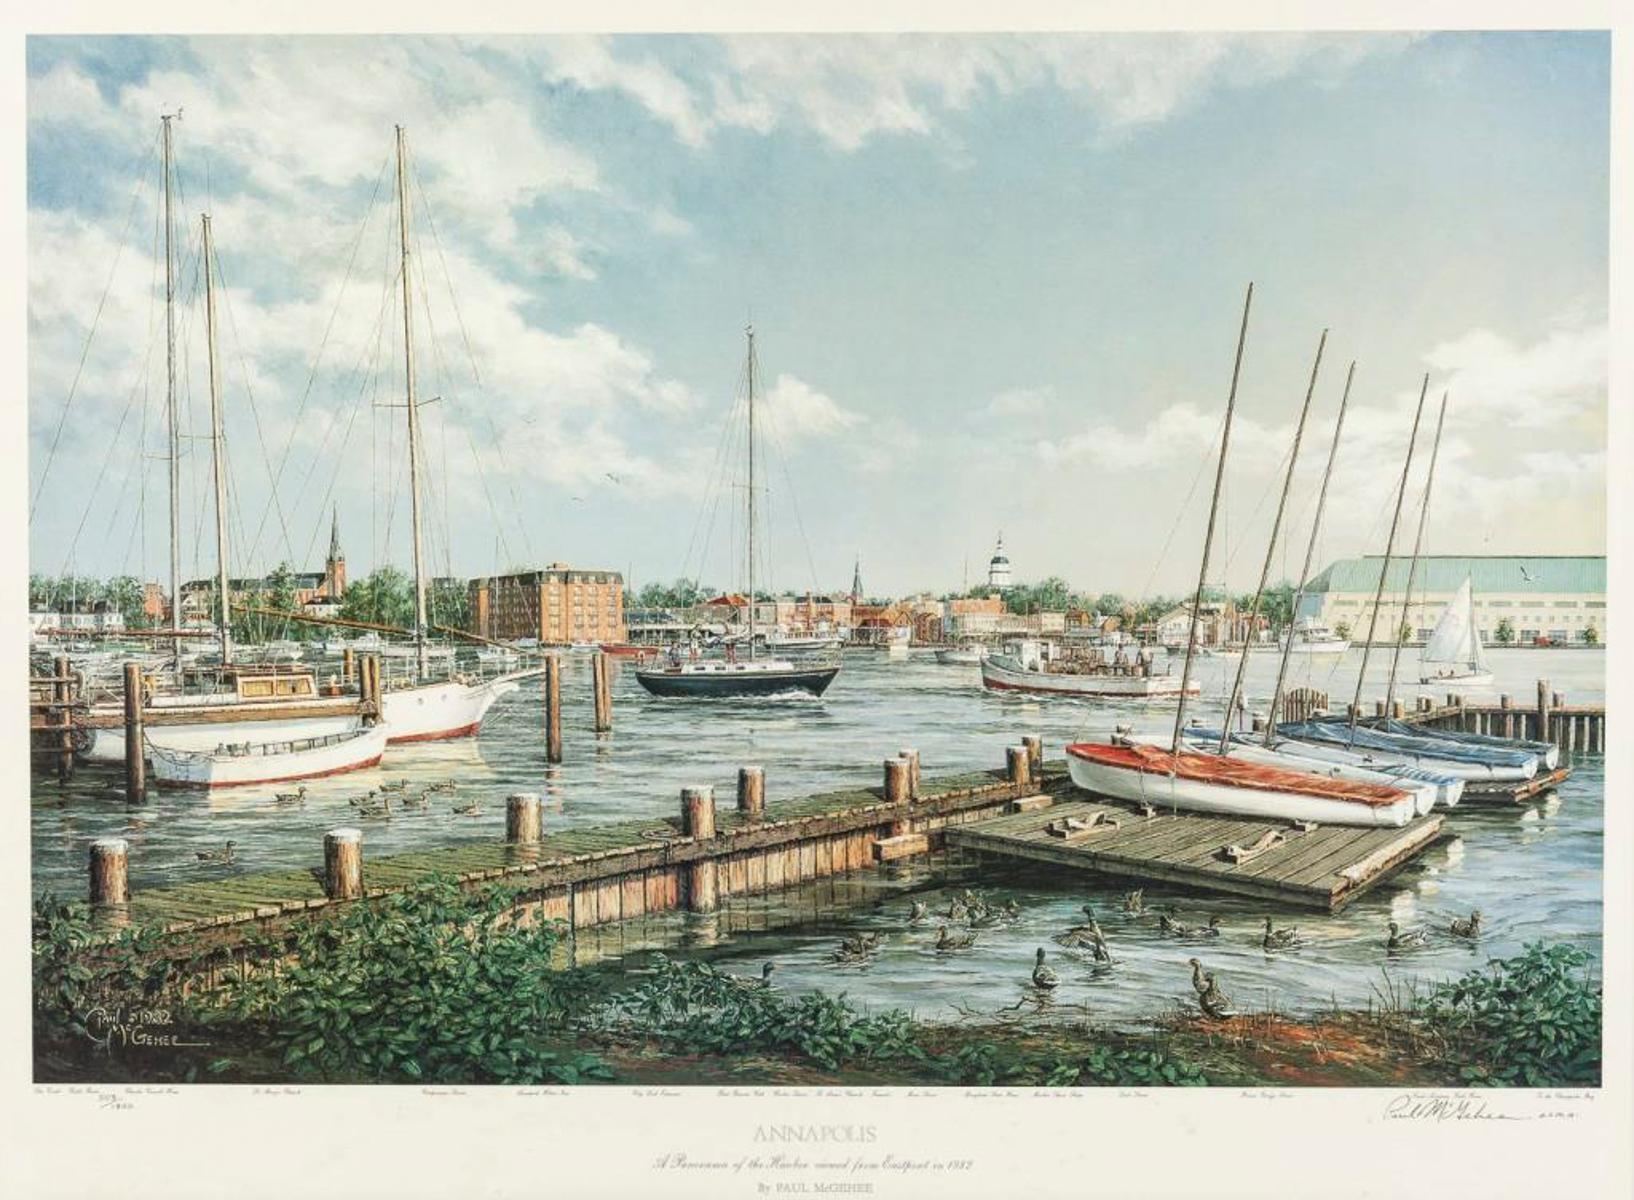 Paul McGehee "Annapolis" Signed Print